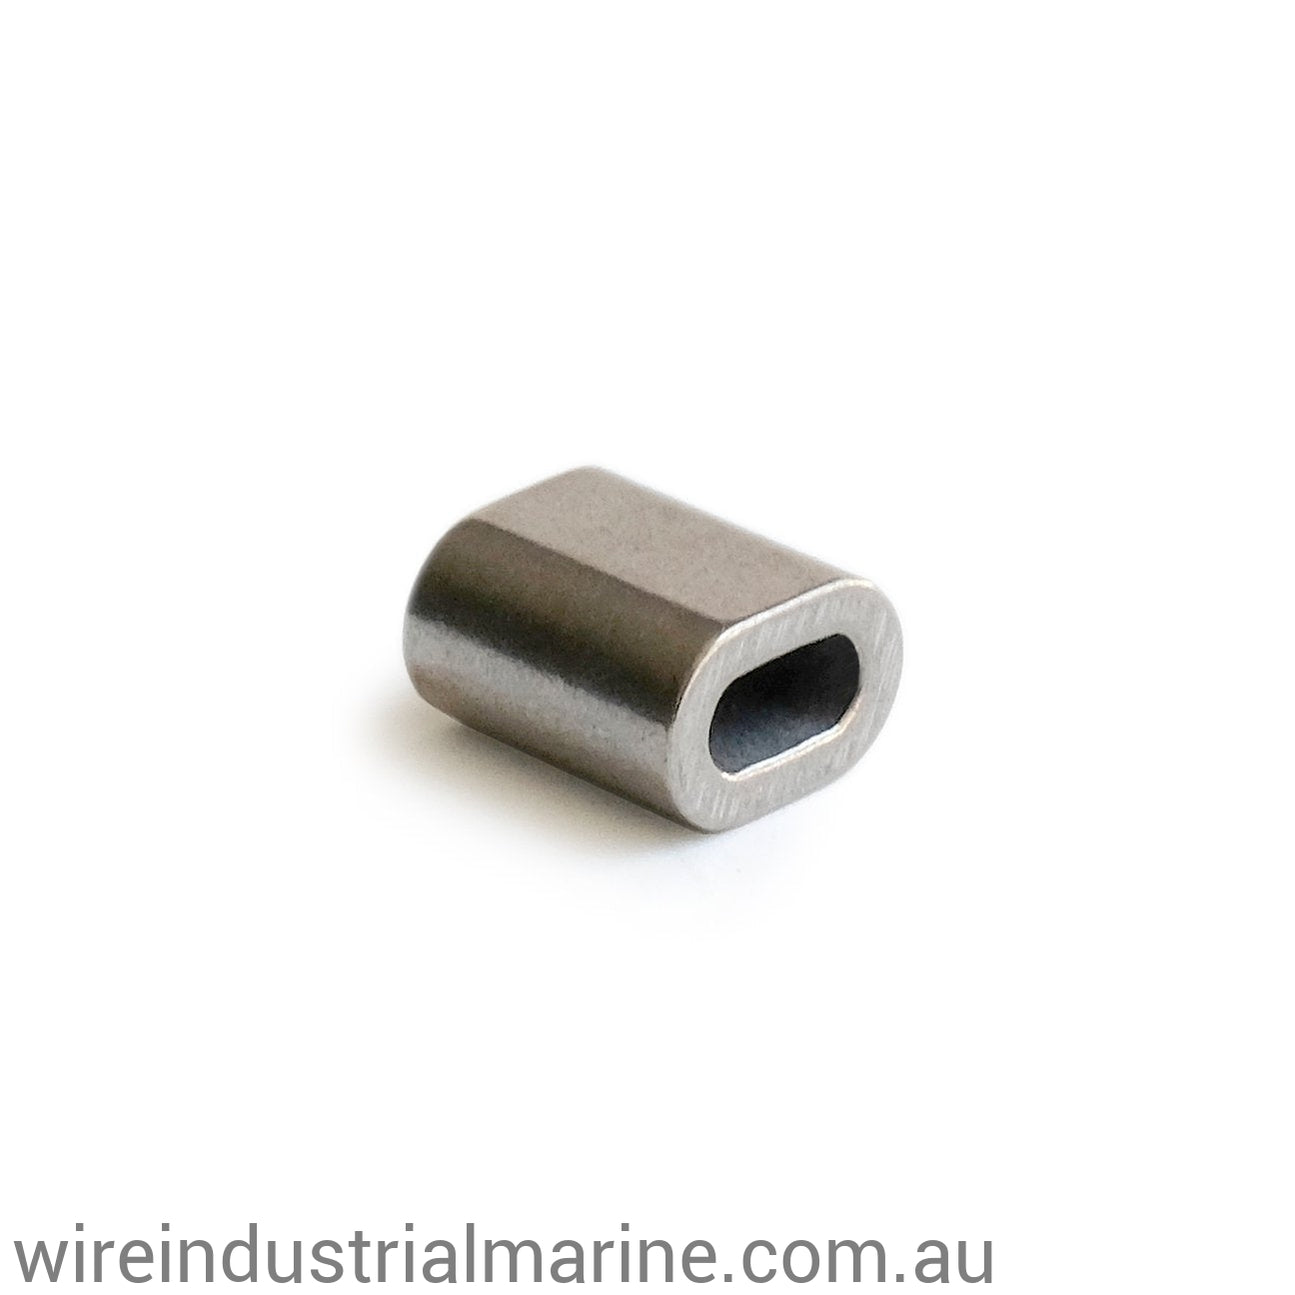 1.5mm - 316 Stainless Steel - DIN Code machine press ferrule for stainless steel wire-wireindustrialmarine